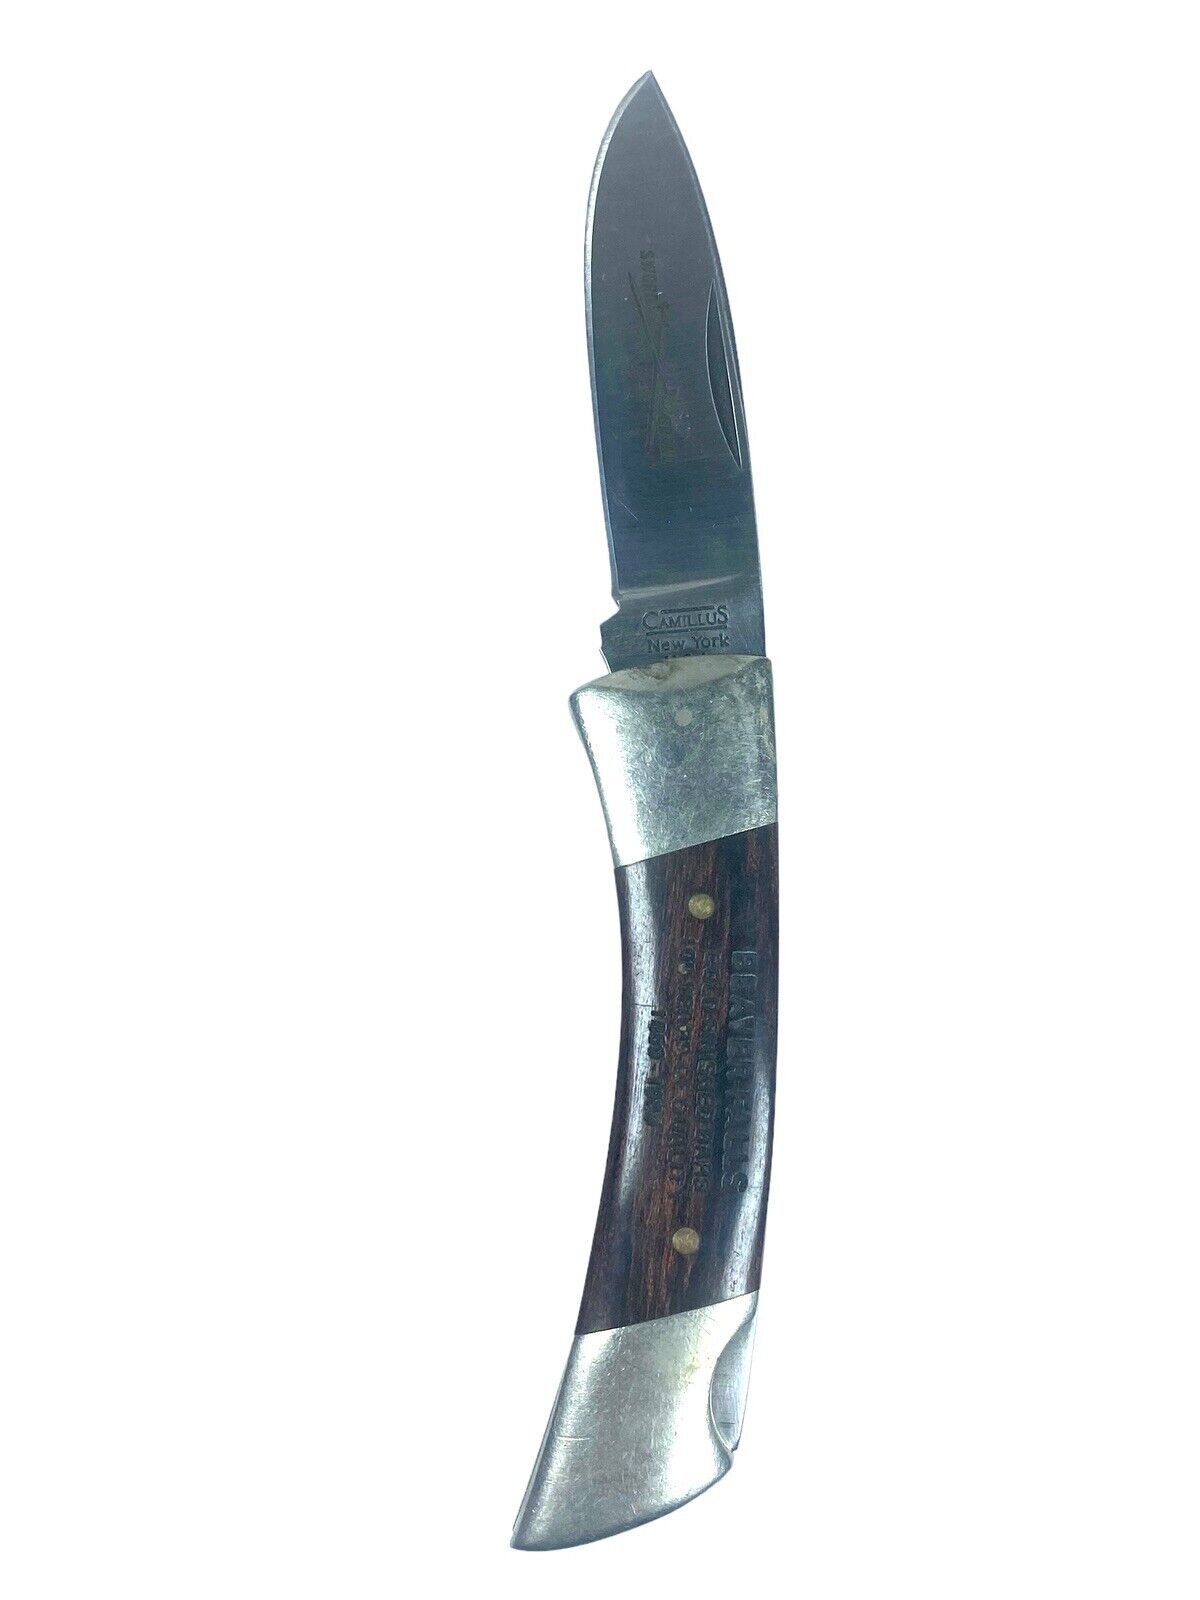 1970s-1980s CAMILLUS NY USA SWORD BRAND # 2 FOLDING LOCKBACK KNIFE Vintage